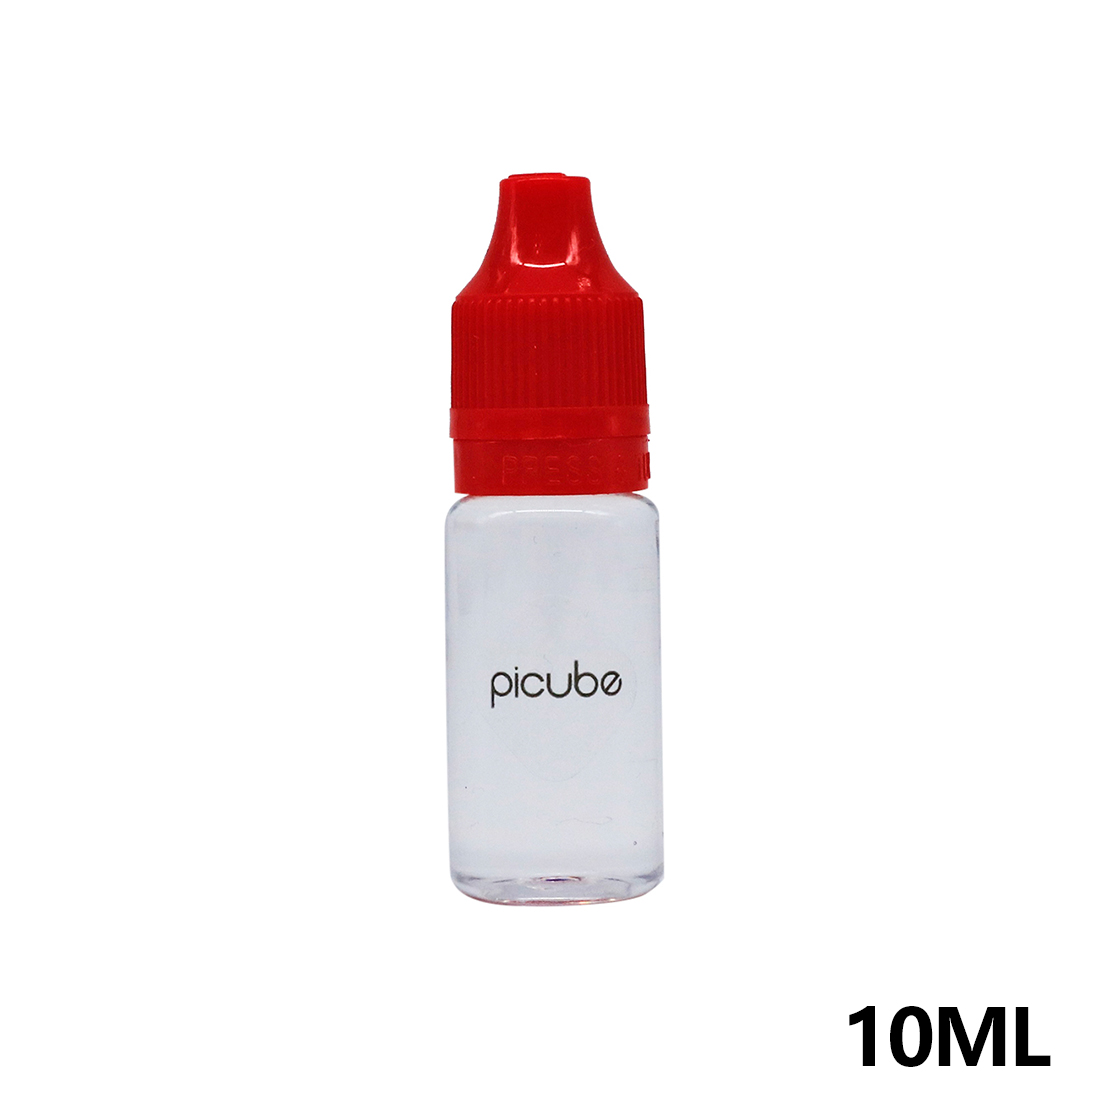 Picube 10ml speed cube lube (Red Cap)